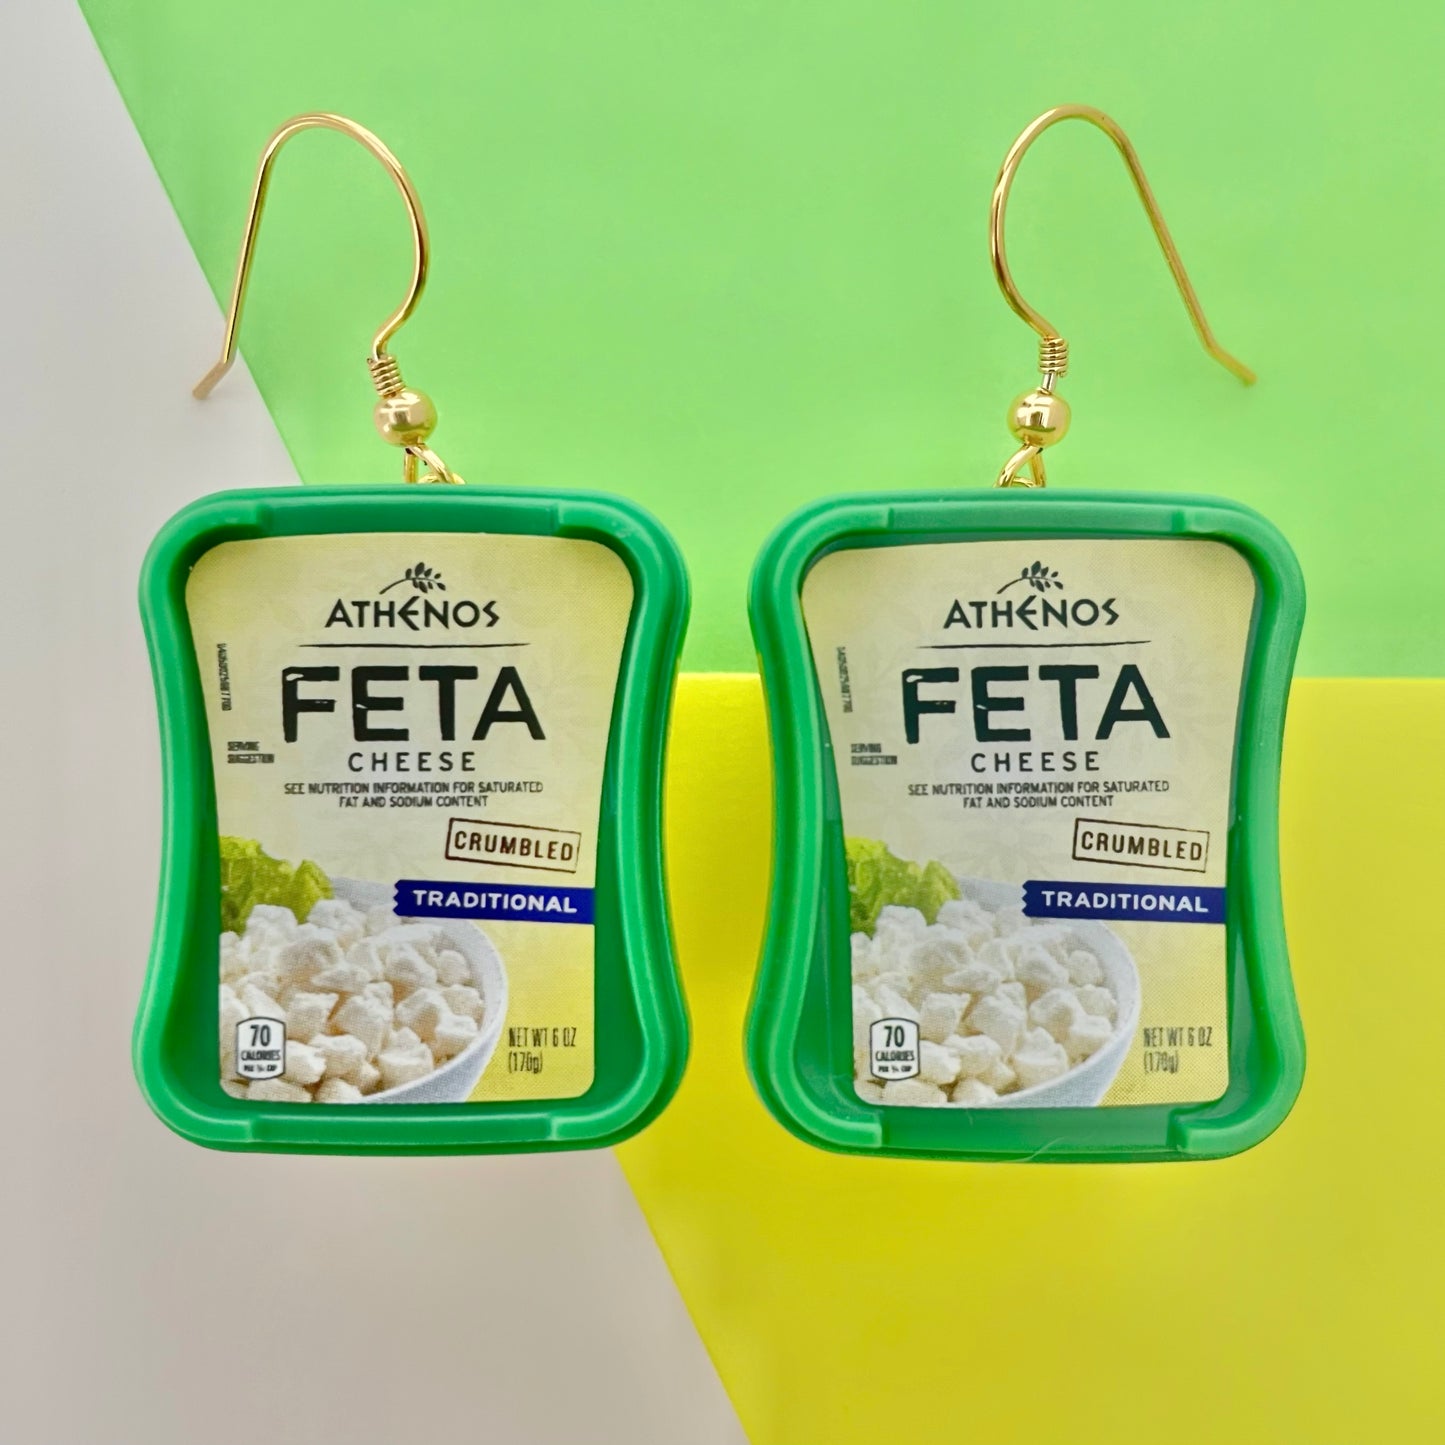 Athenos Feta Cheese Mini Brands Earrings